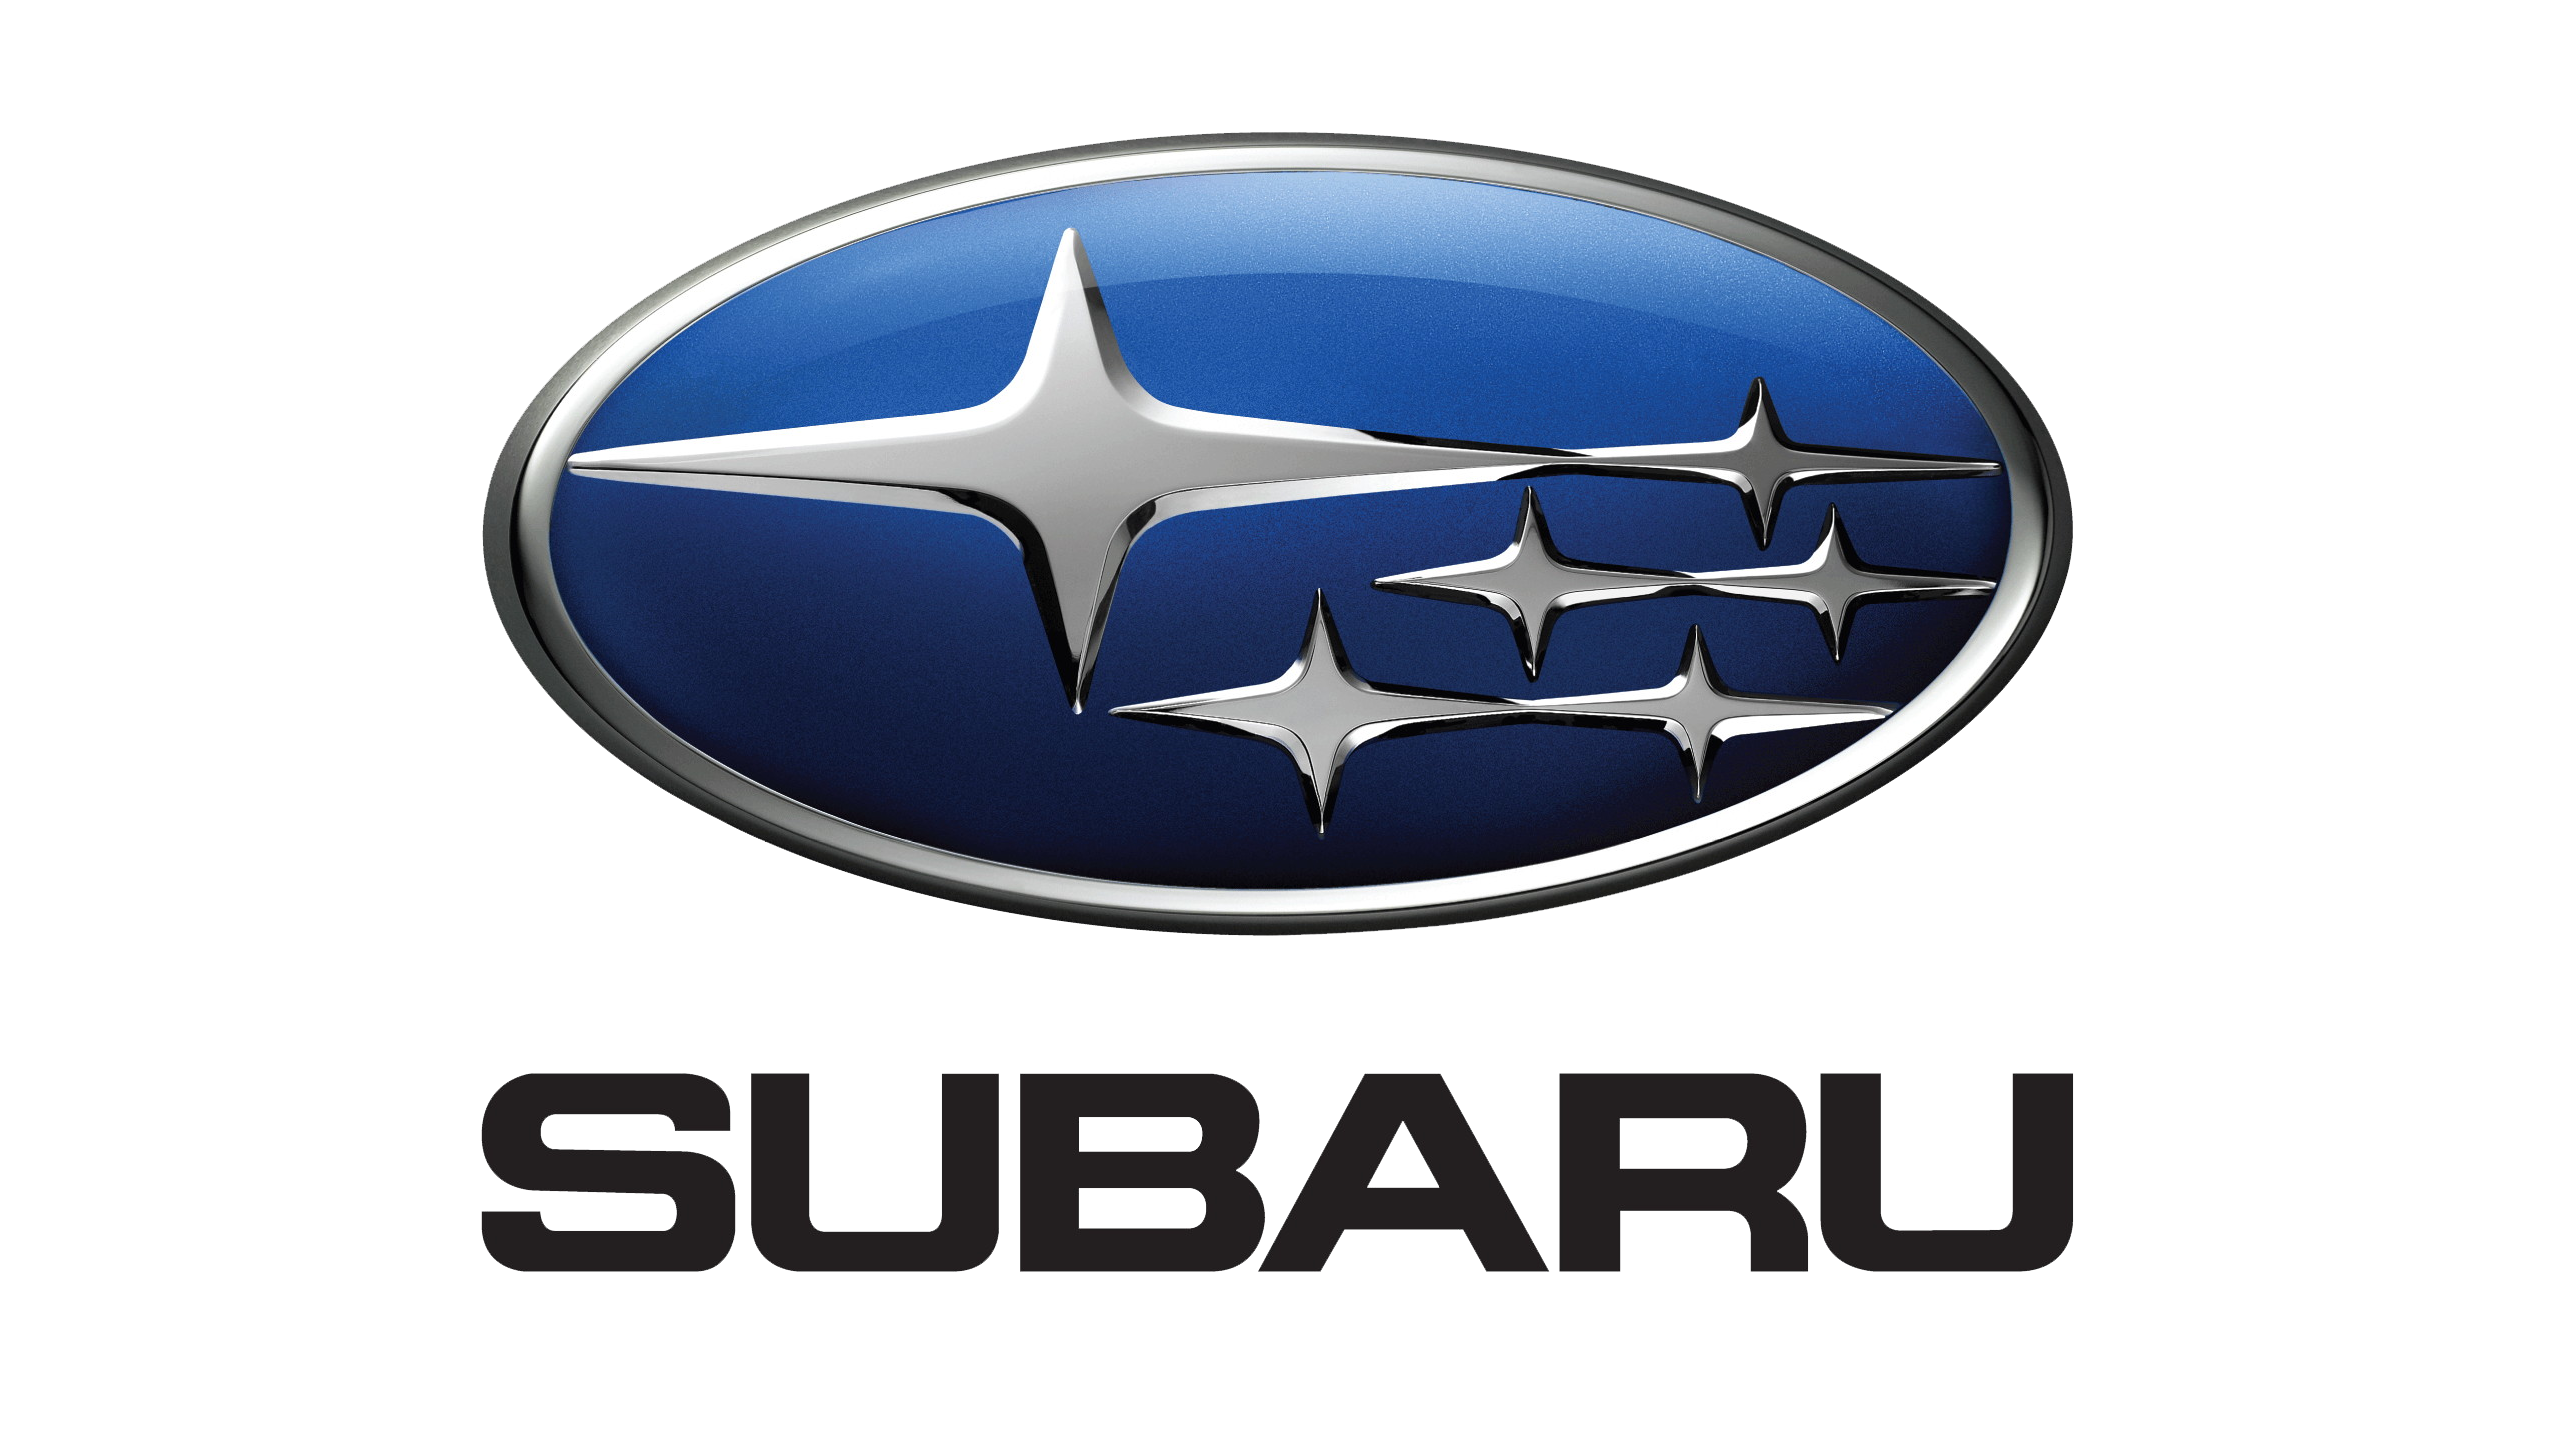 Subaru – Logos Download